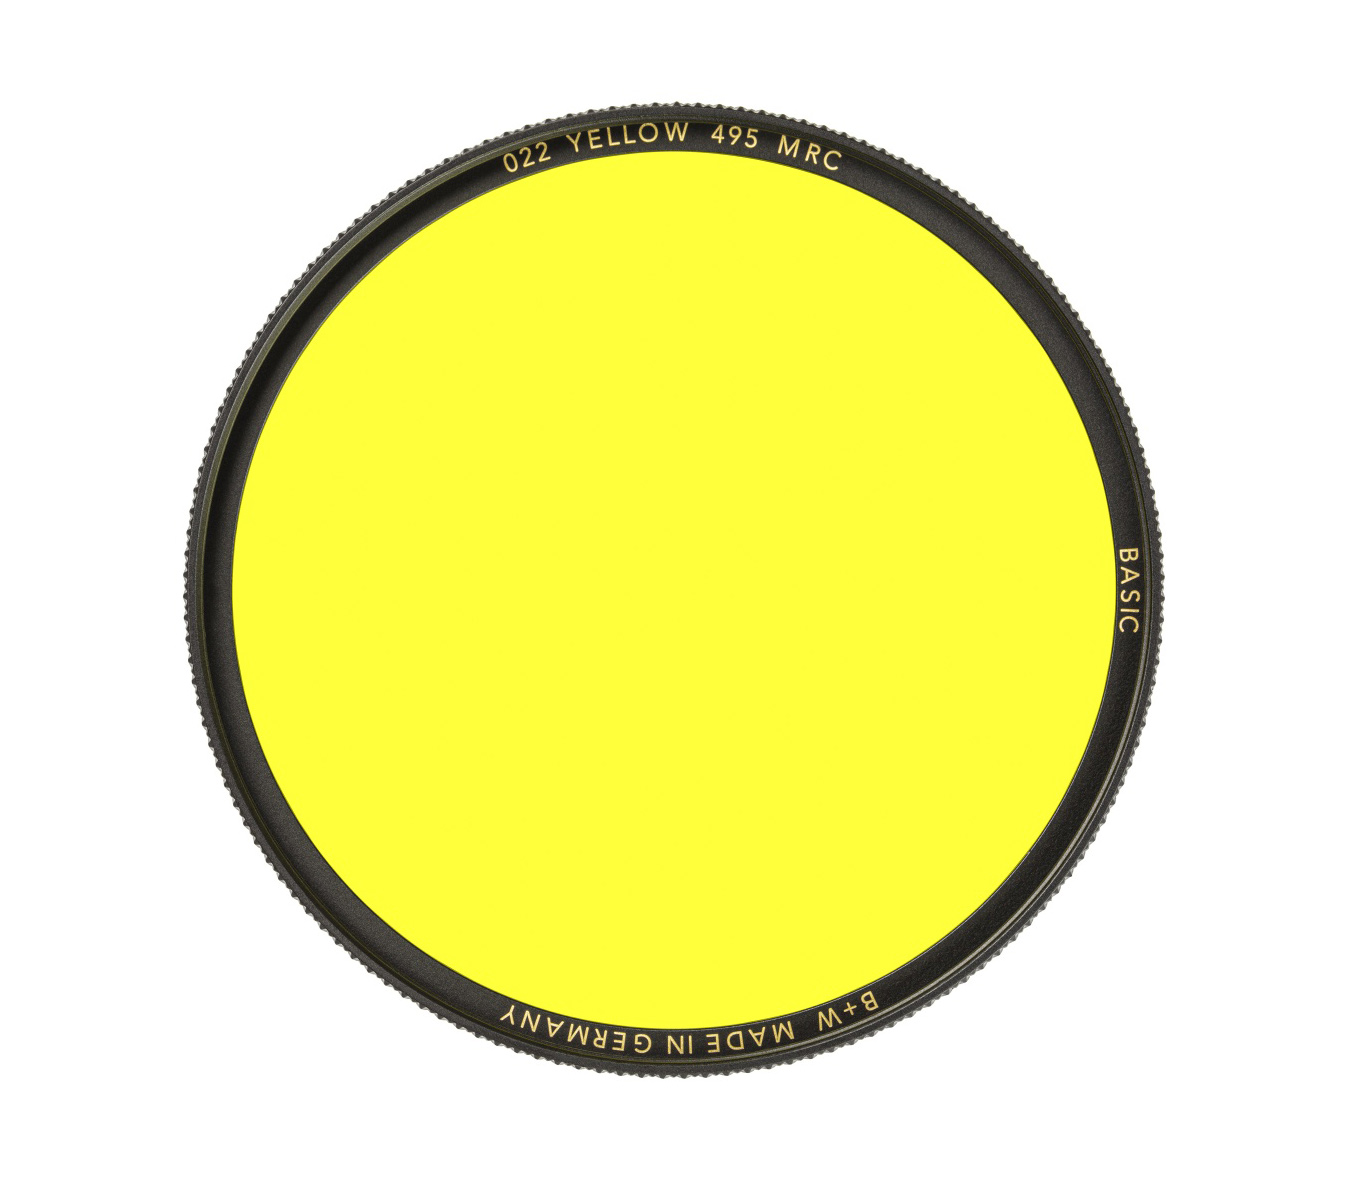 BASIC 022 Yellow MRC 495 77mm